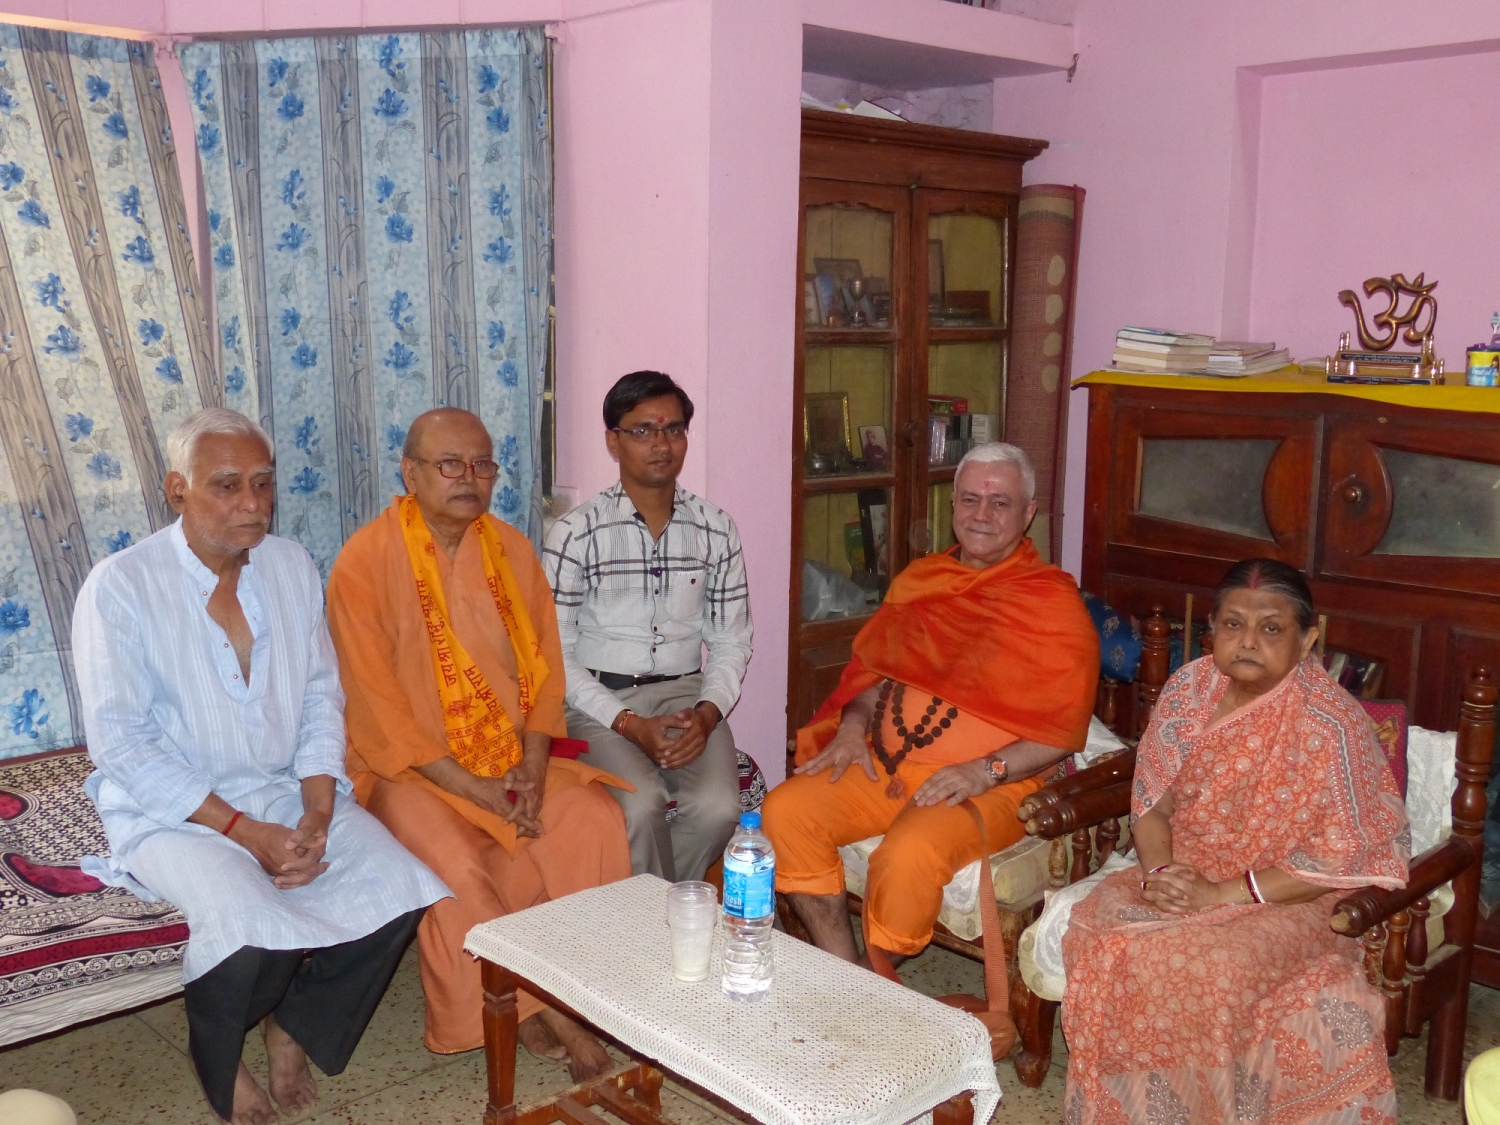 Encuentro de H.H. Jagat Guru Amrta Sūryānanda Mahā Rāja con Svámin Malgalteertam - Dehogar, India - 2016, mayo